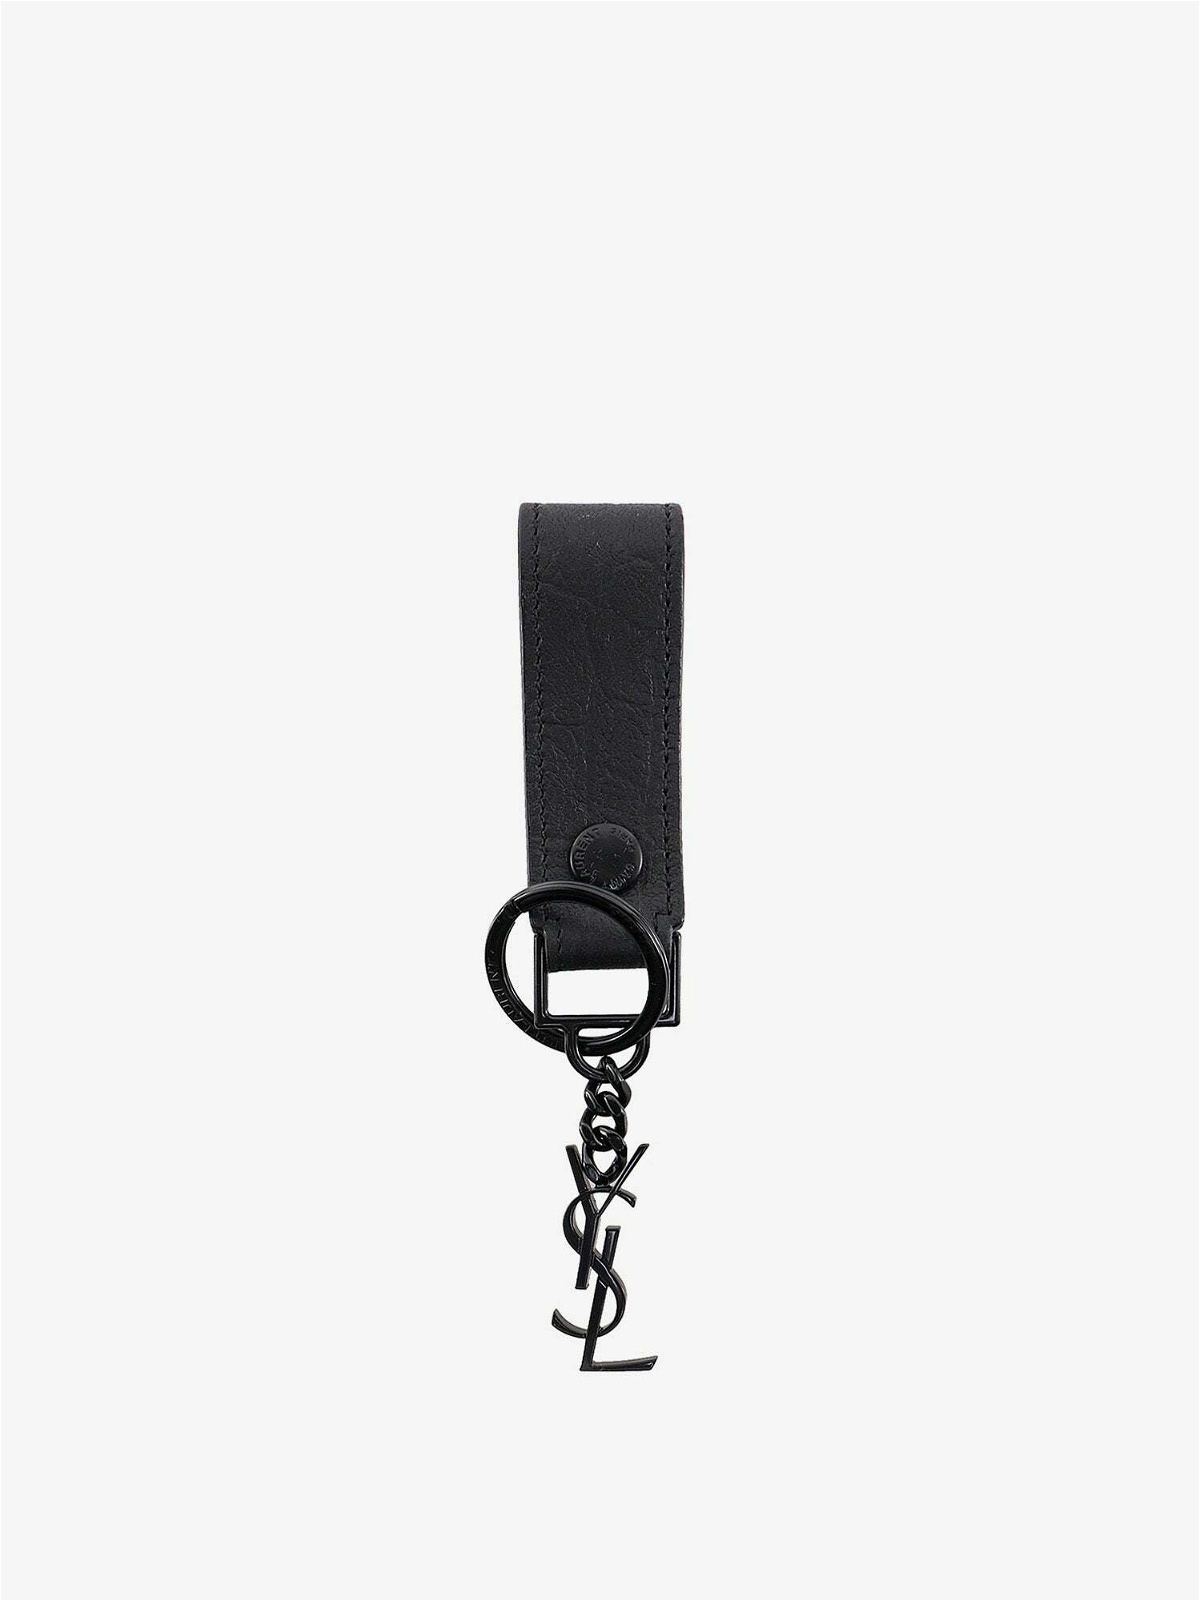 Saint Laurent YSL Monogram Logo Silver Key Chain Key Ring Bag Charm